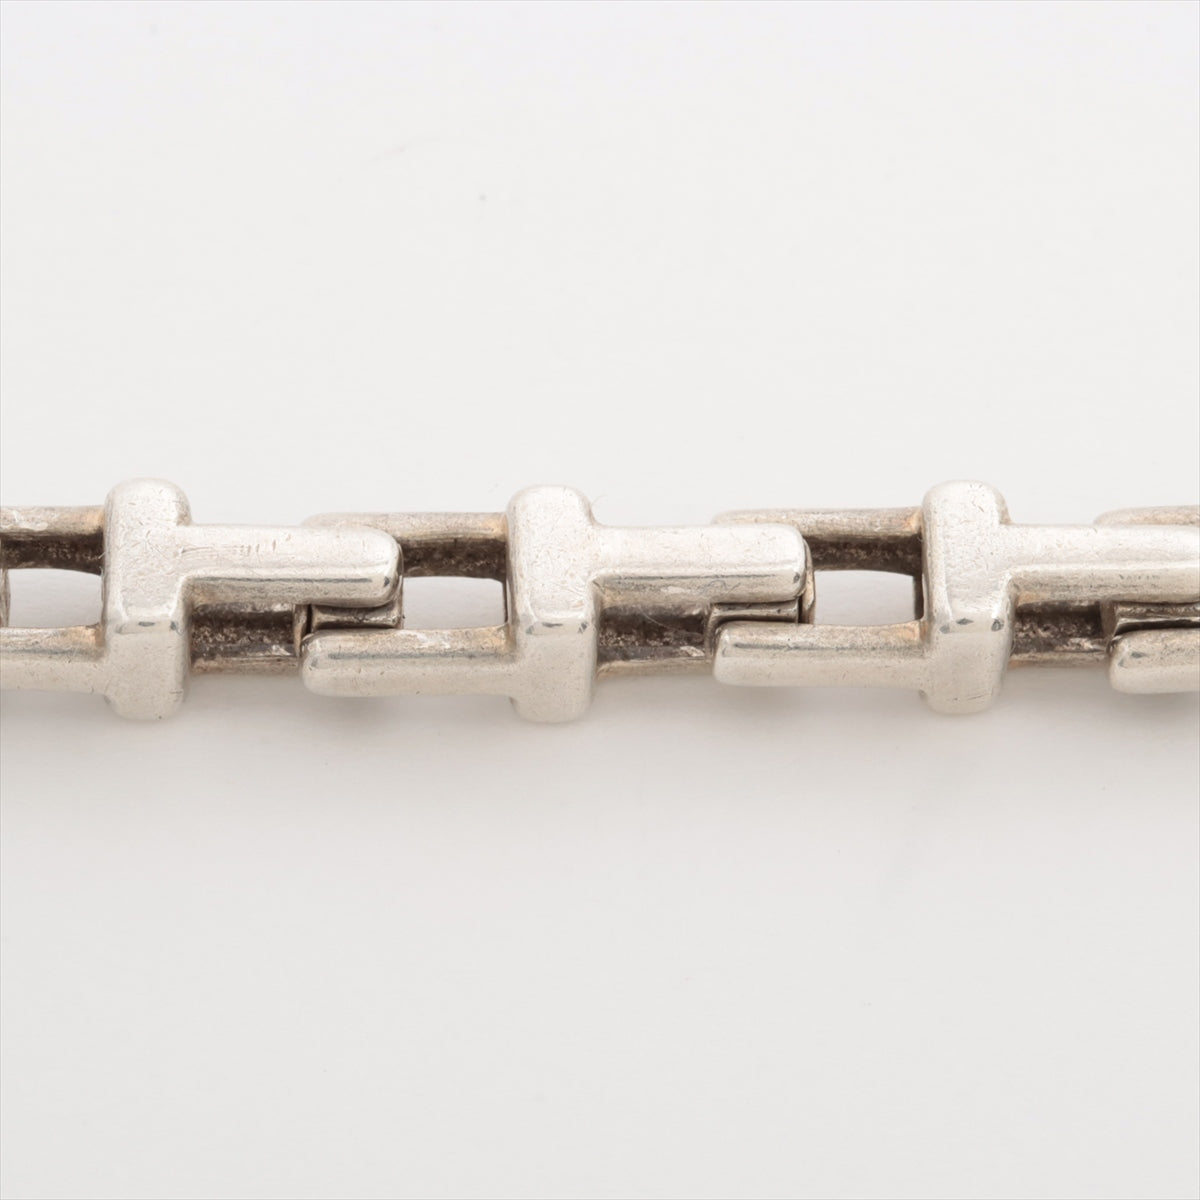 Tiffany T Chain Bracelet 925 13.1g Silver